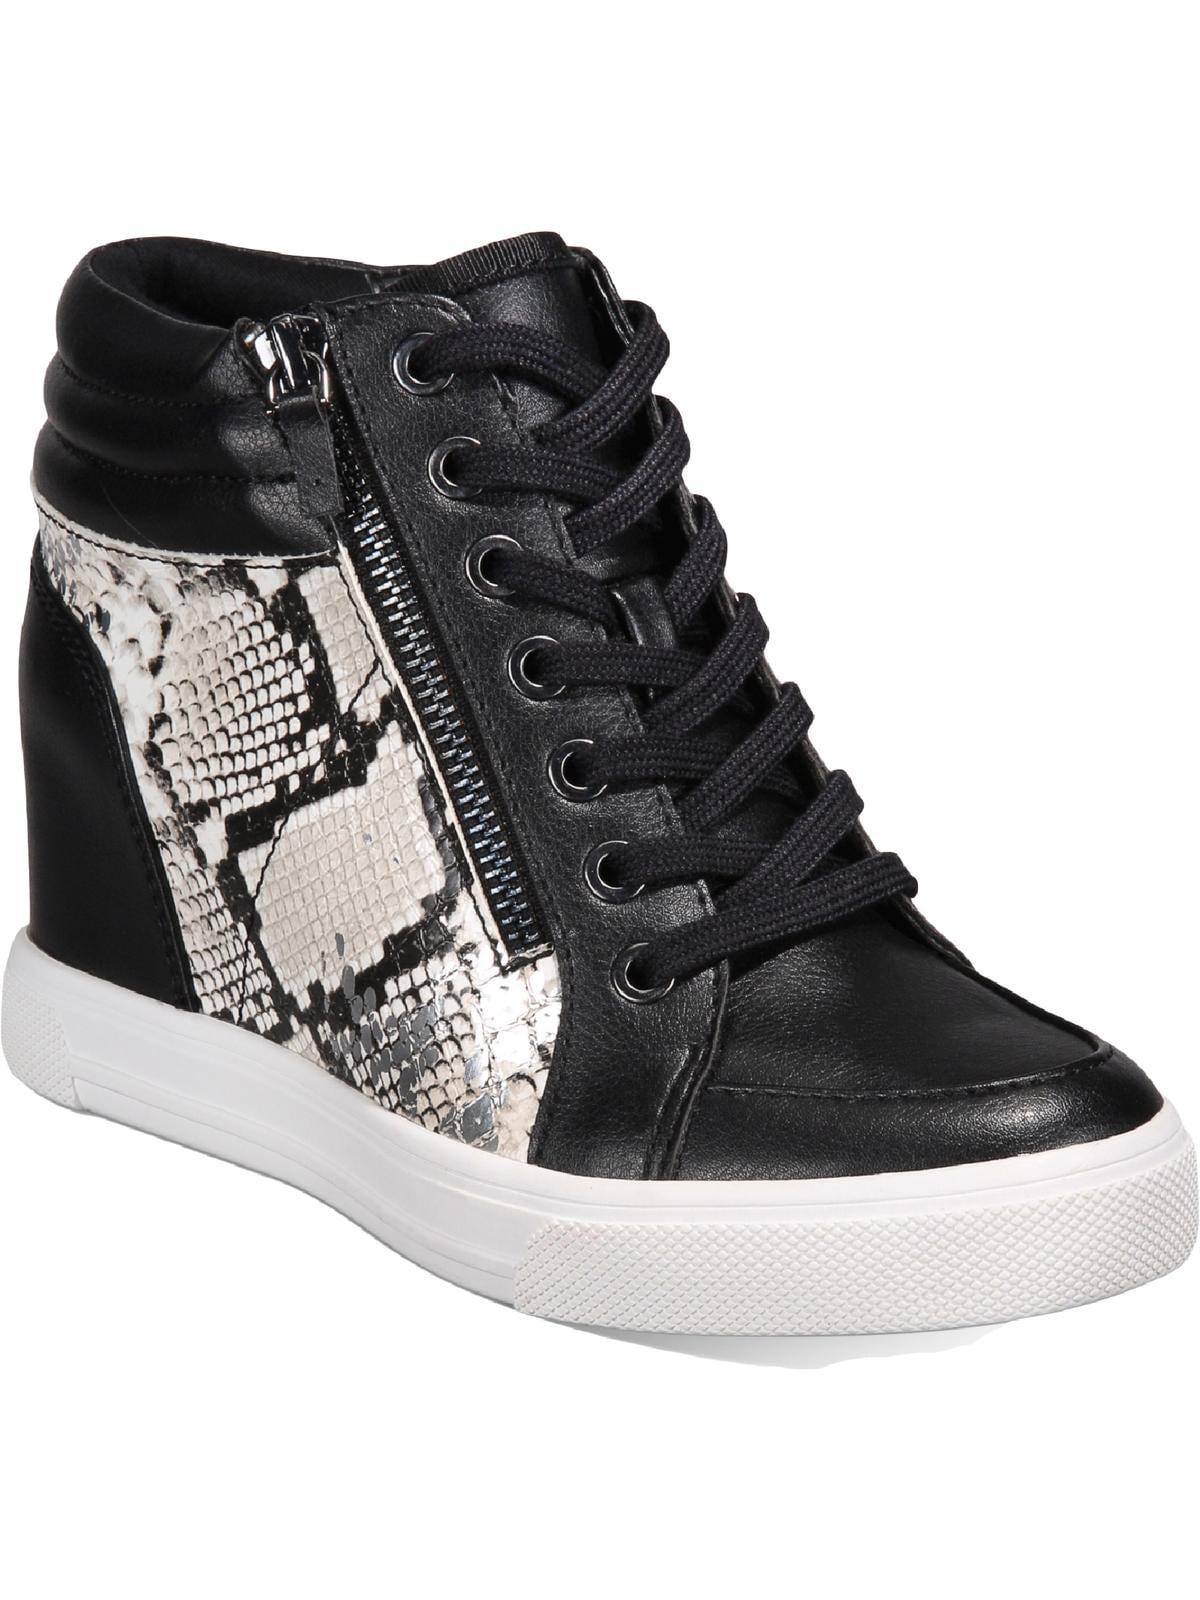 Aldo Womens Kaia Leather Casual and Fashion Sneakers Black 6 Medium (B,M) - Walmart.com